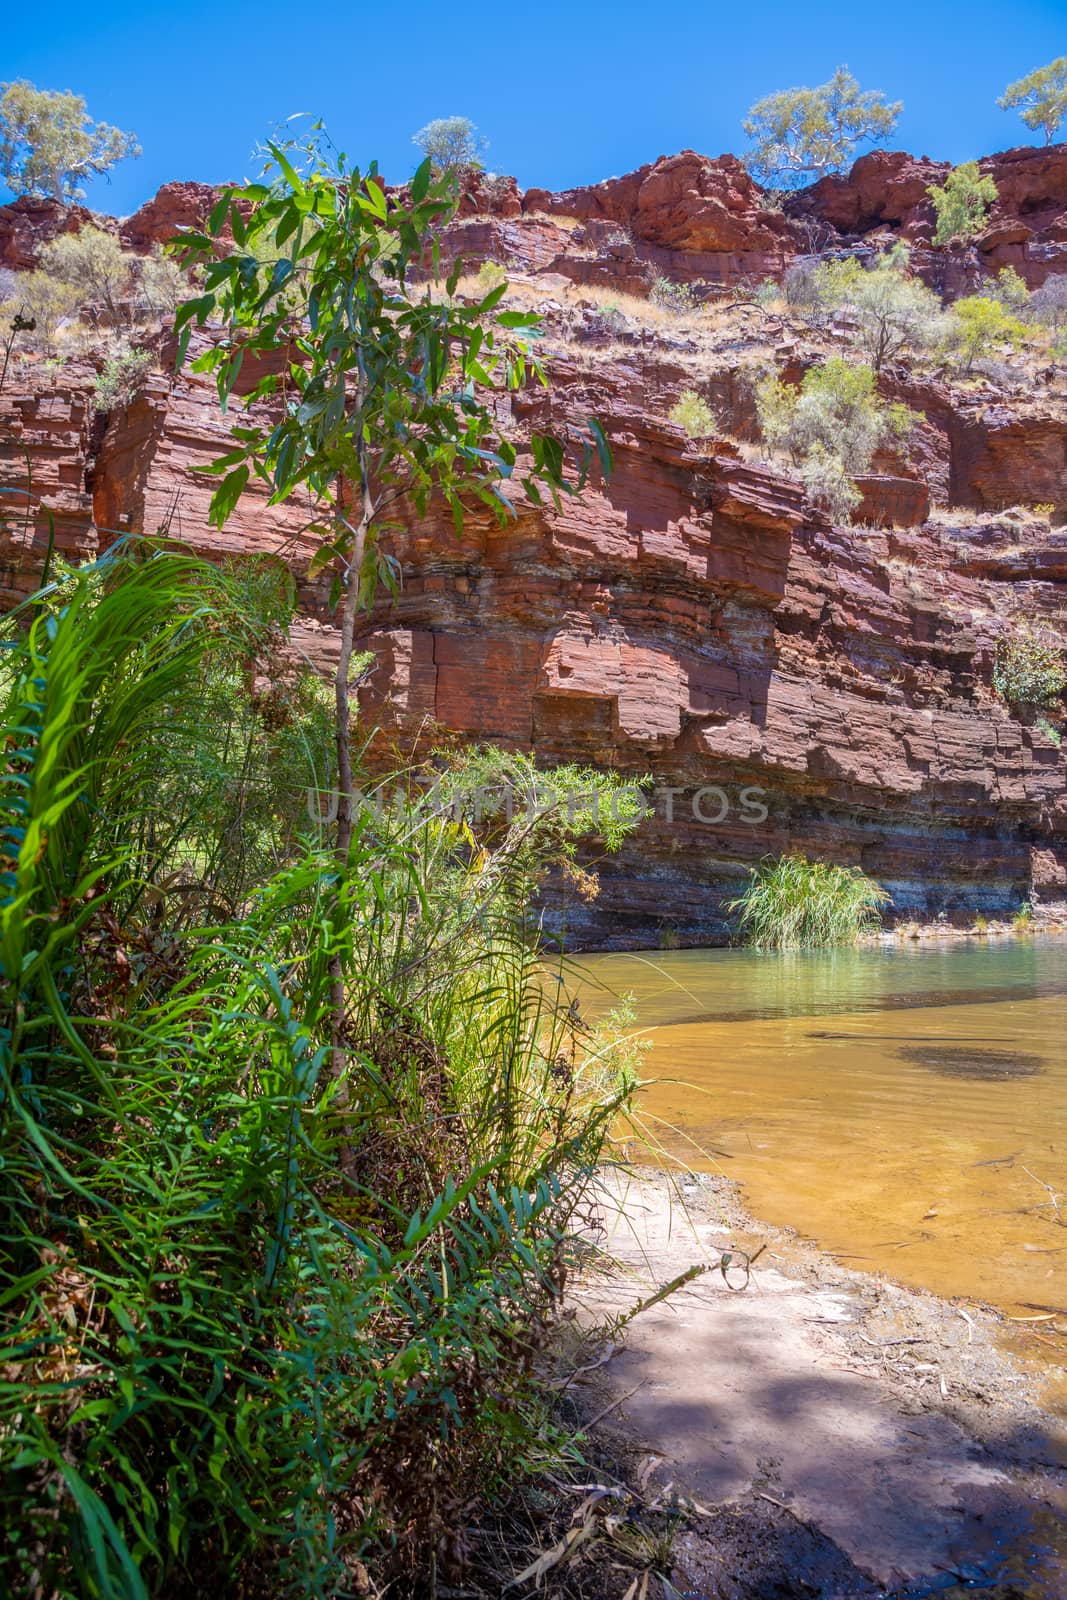 Pool and green vegetation at bottom of Dales Gorge Fortescue Falls Karijini National Park Australia